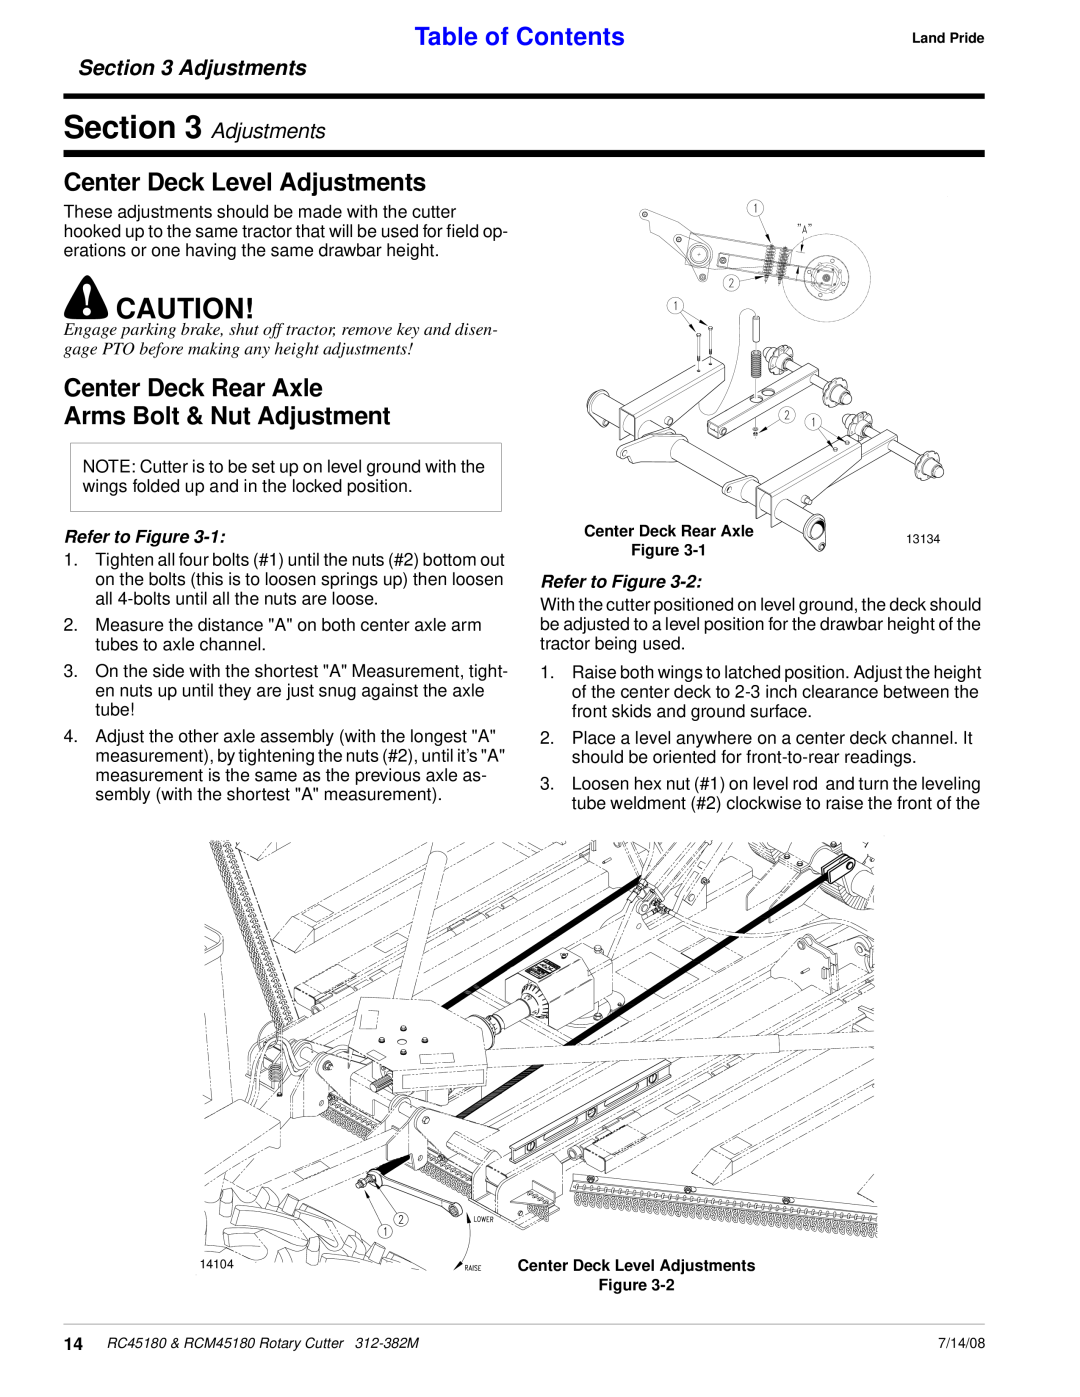 Land Pride RC45180 Center Deck Level Adjustments, Center Deck Rear Axle Arms Bolt & Nut Adjustment, Table of Contents 